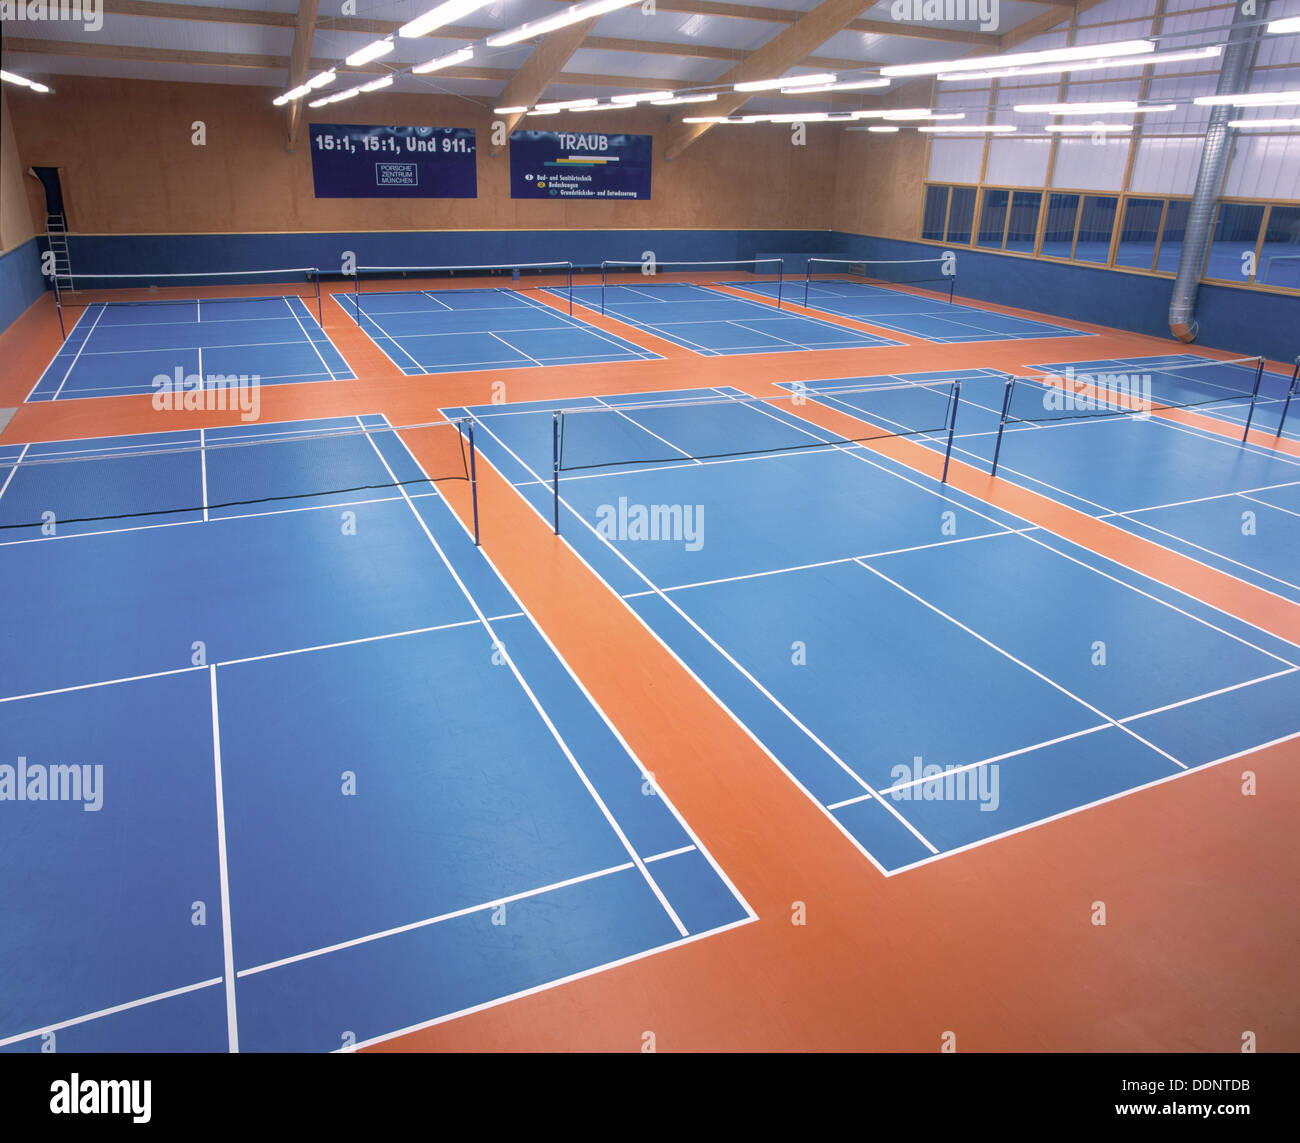 Badmintonhalle -Fotos und -Bildmaterial in hoher Auflösung – Alamy